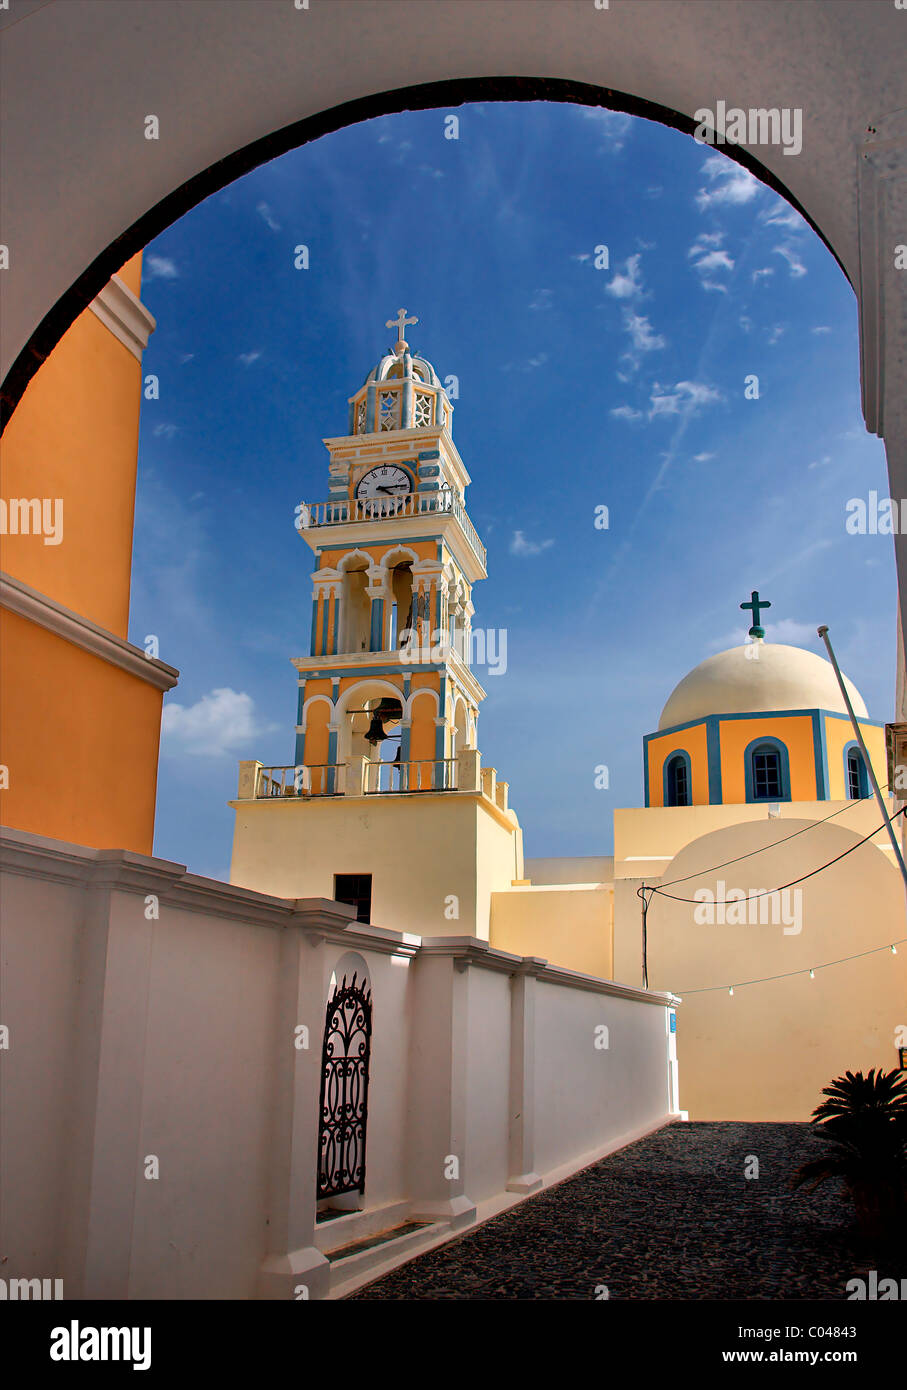 The Catholic church in Fira village, Santorini island, Cyclades, Greece Stock Photo